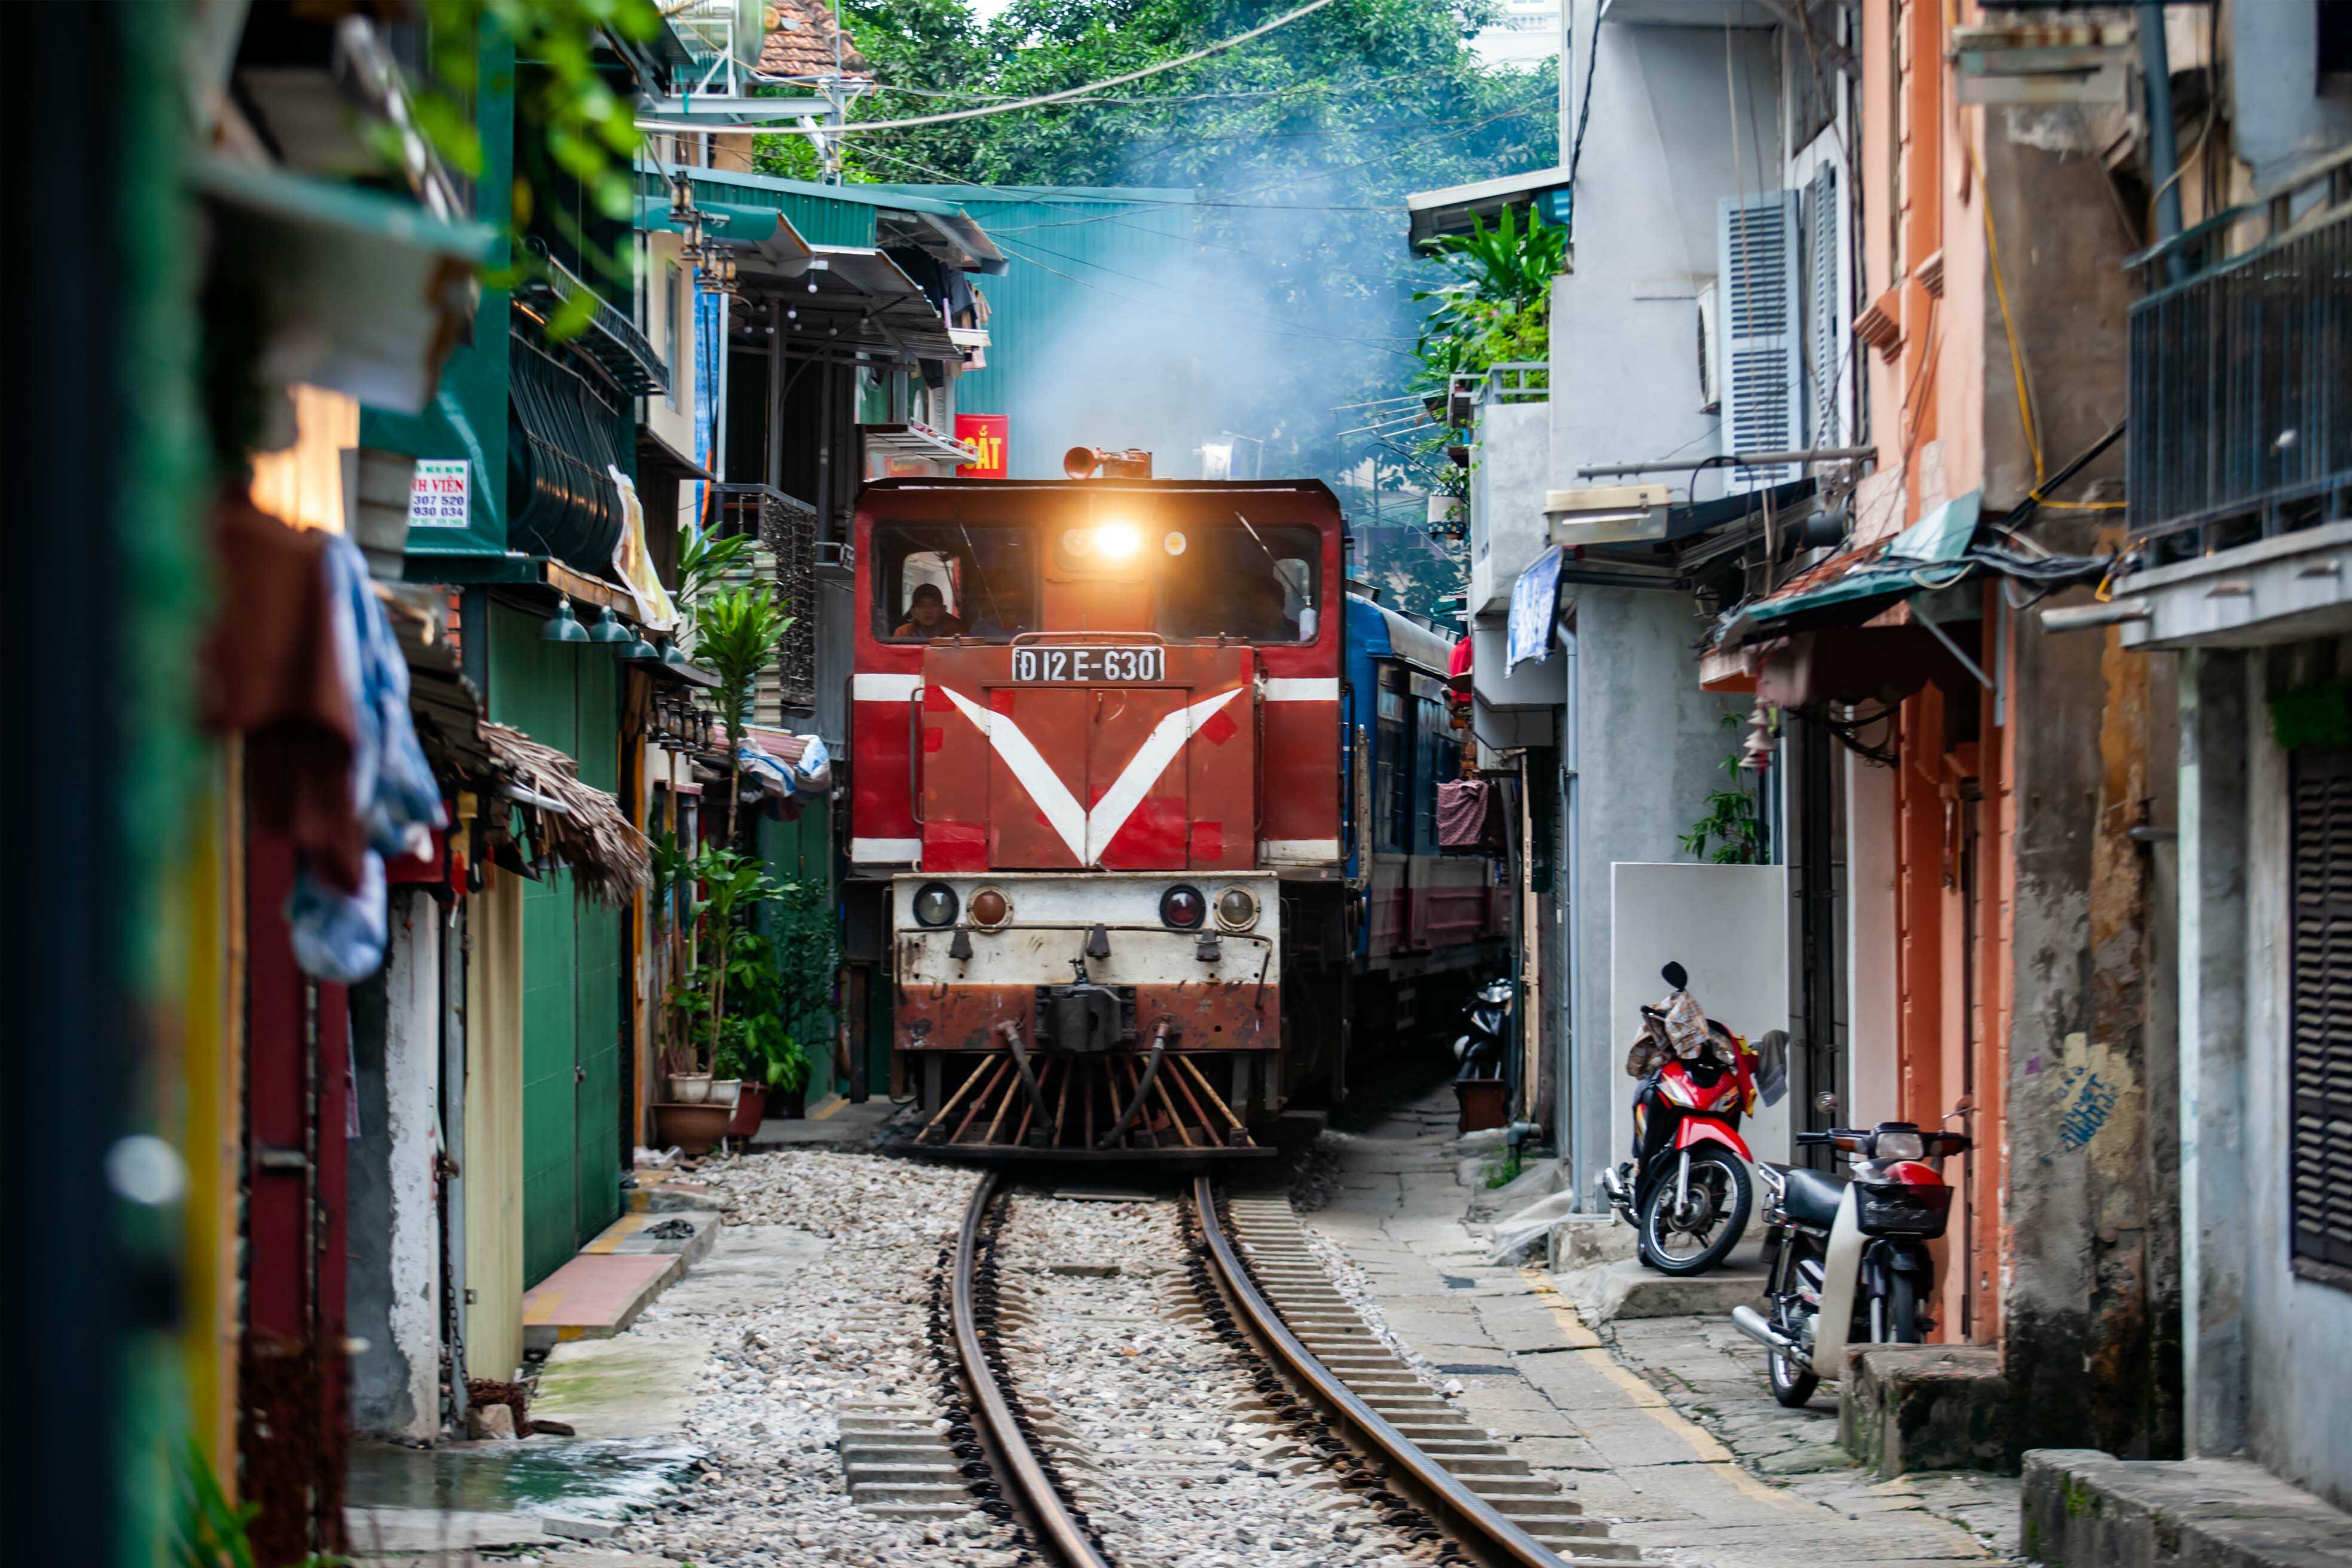 From Hanoi to Da Nang: 7-Day Amazing Vietnam Trip (Overnight train included)